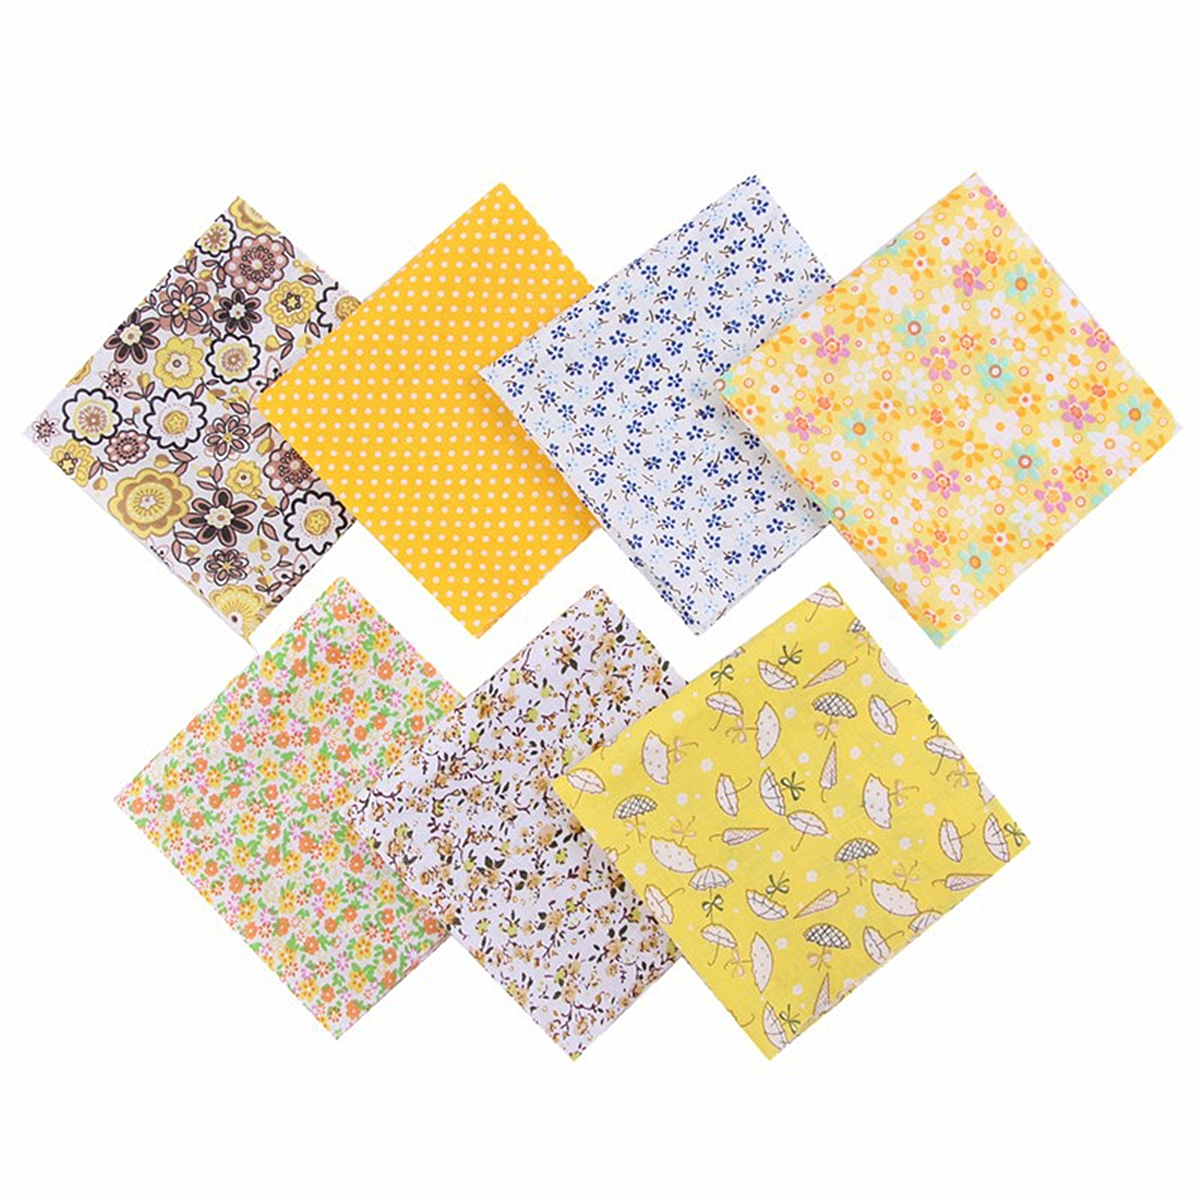 DIY-7PCS-Quilting-Bundle-Patchwork-Cotton-Fabric-Handmade-Sewing-Crafts-Floral-1691620-2